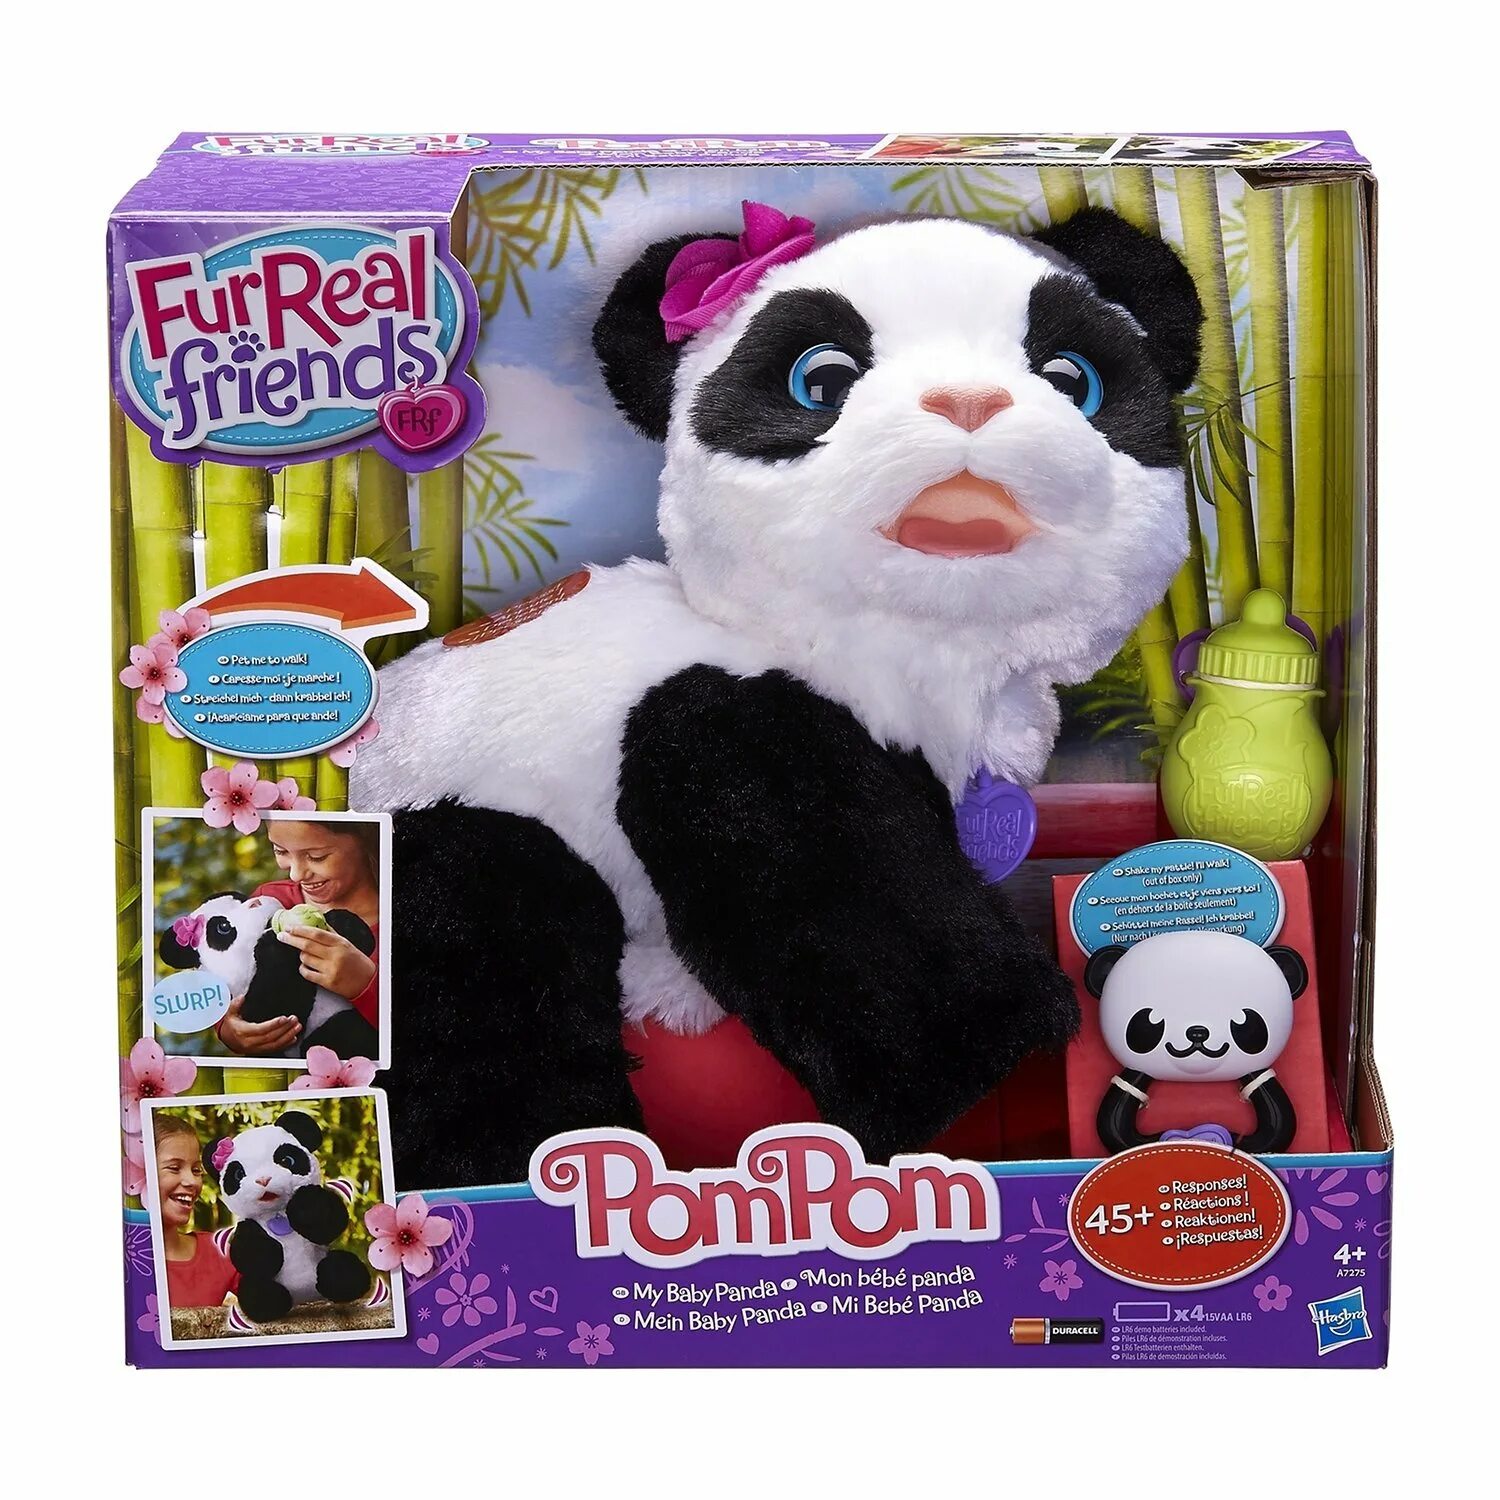 Хасбро интерактивная игрушка Панда. Hasbro FURREAL Панда. Панда интерактивная игрушка FURREAL. Игрушки Хасбро Фуриал френдс. Приму интерактивная